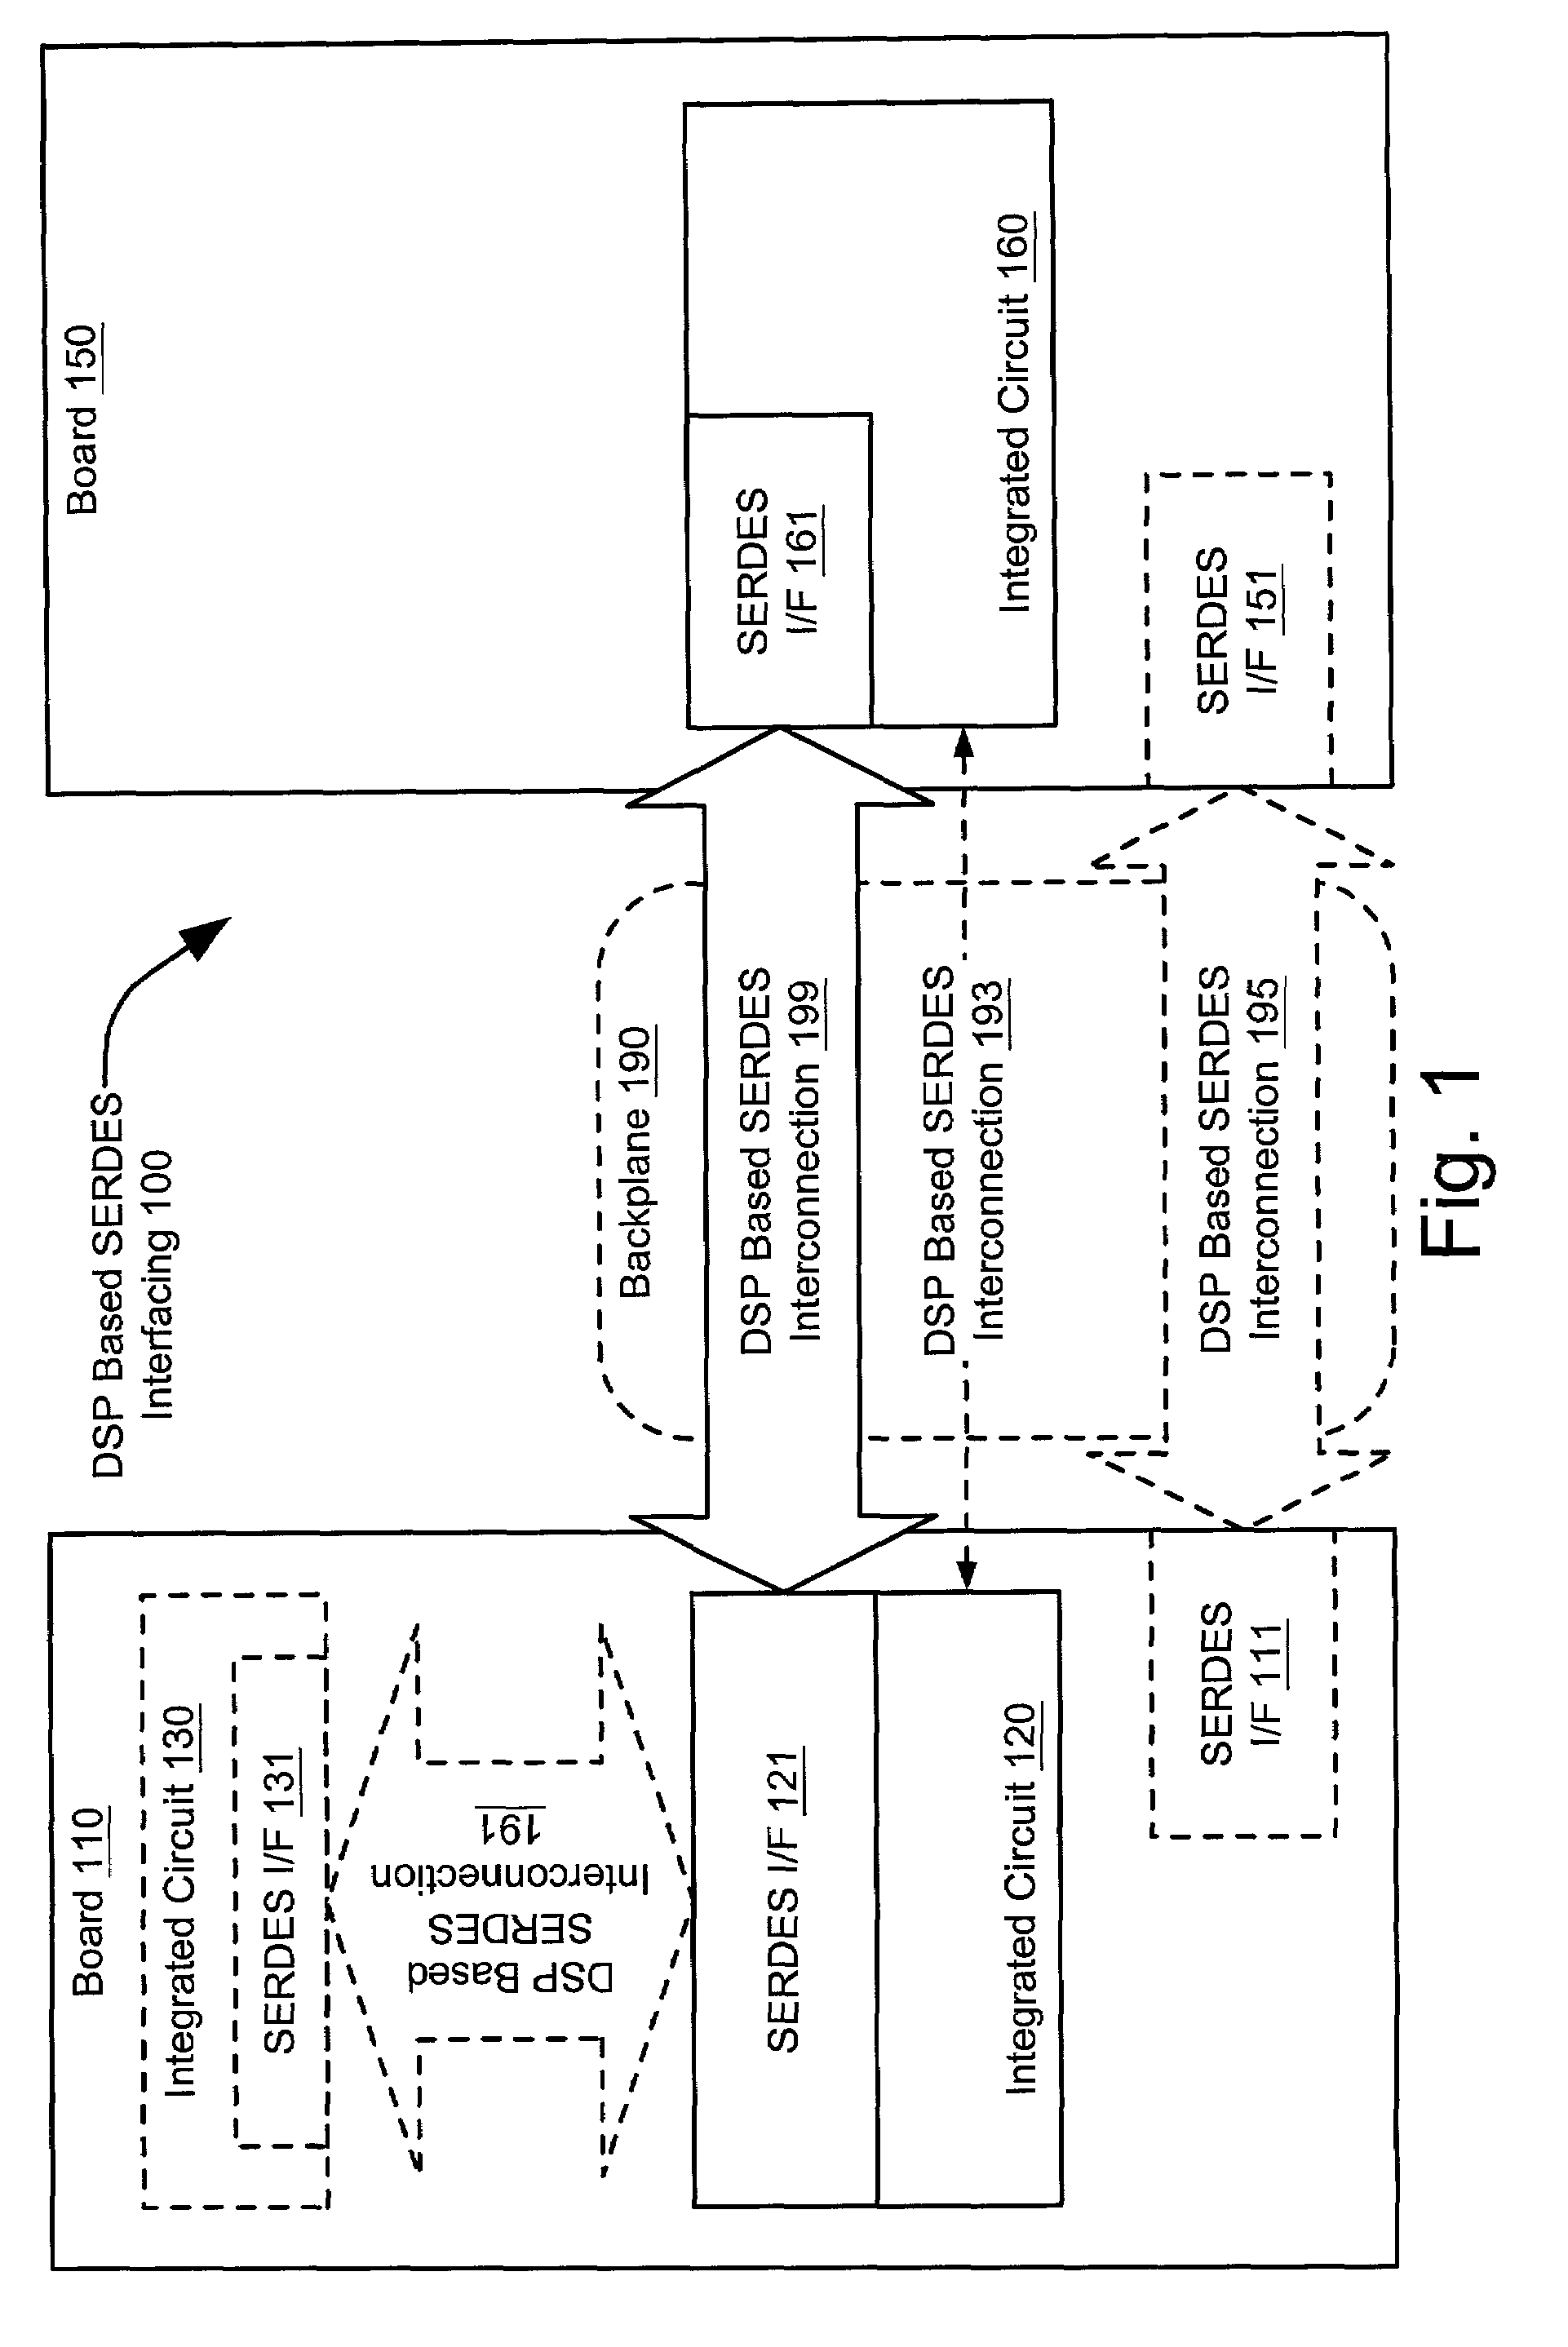 Digital signal processing based de-serializer